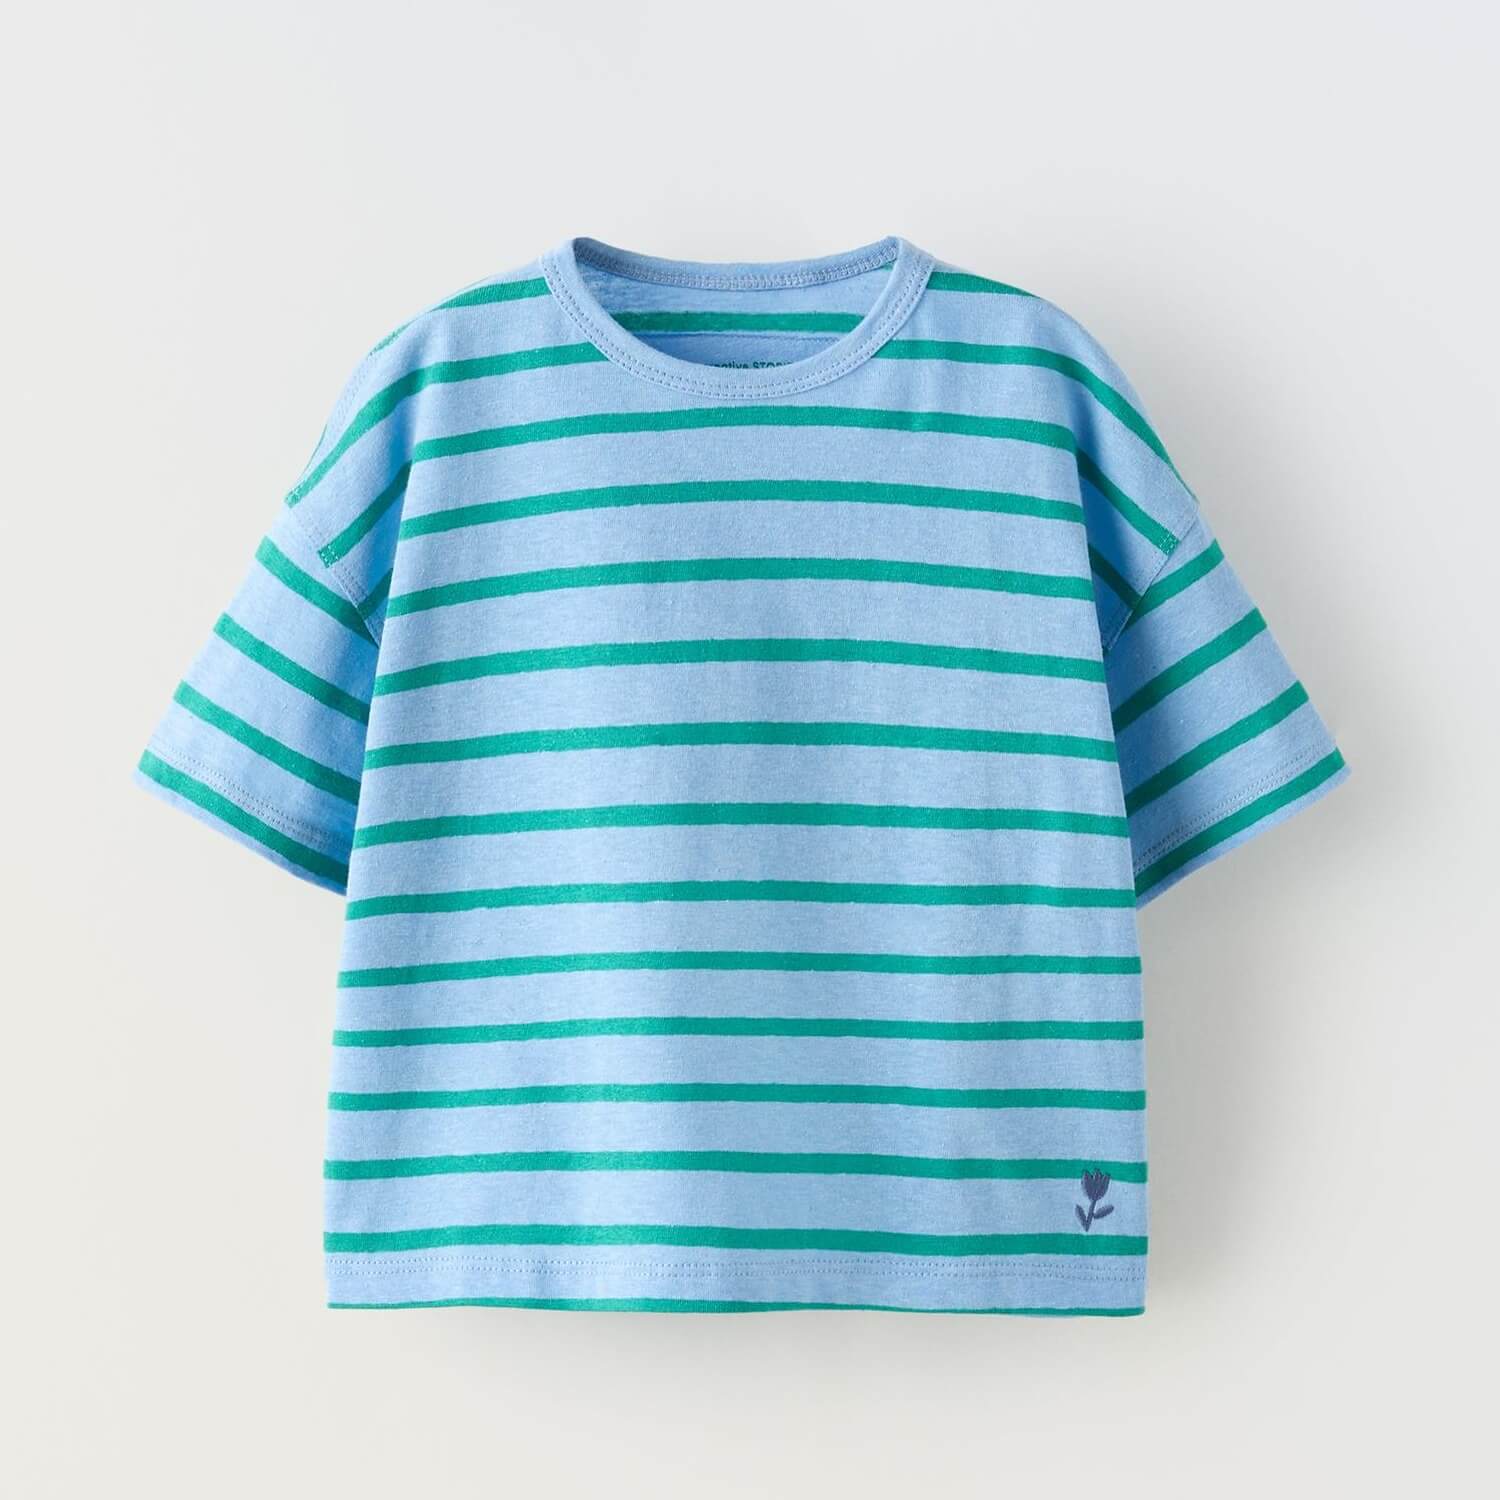 Футболка Zara Woven Striped With Embroidery, голубой/зеленый рубашка zara striped with embroidery голубой белый